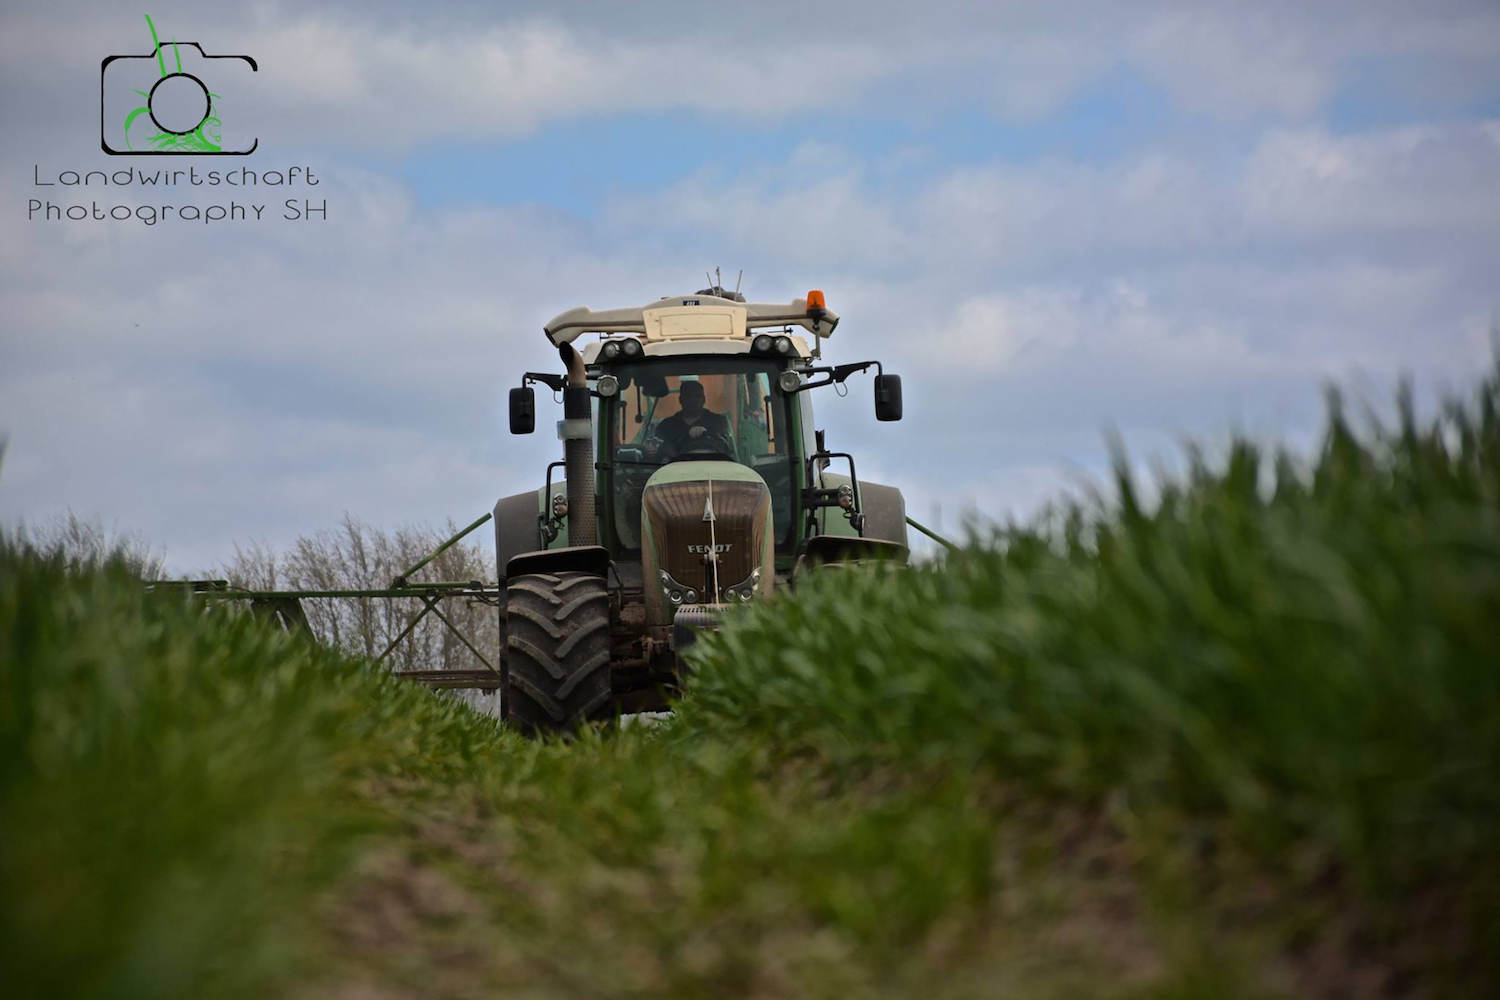 Landwirtschafts Photography SH